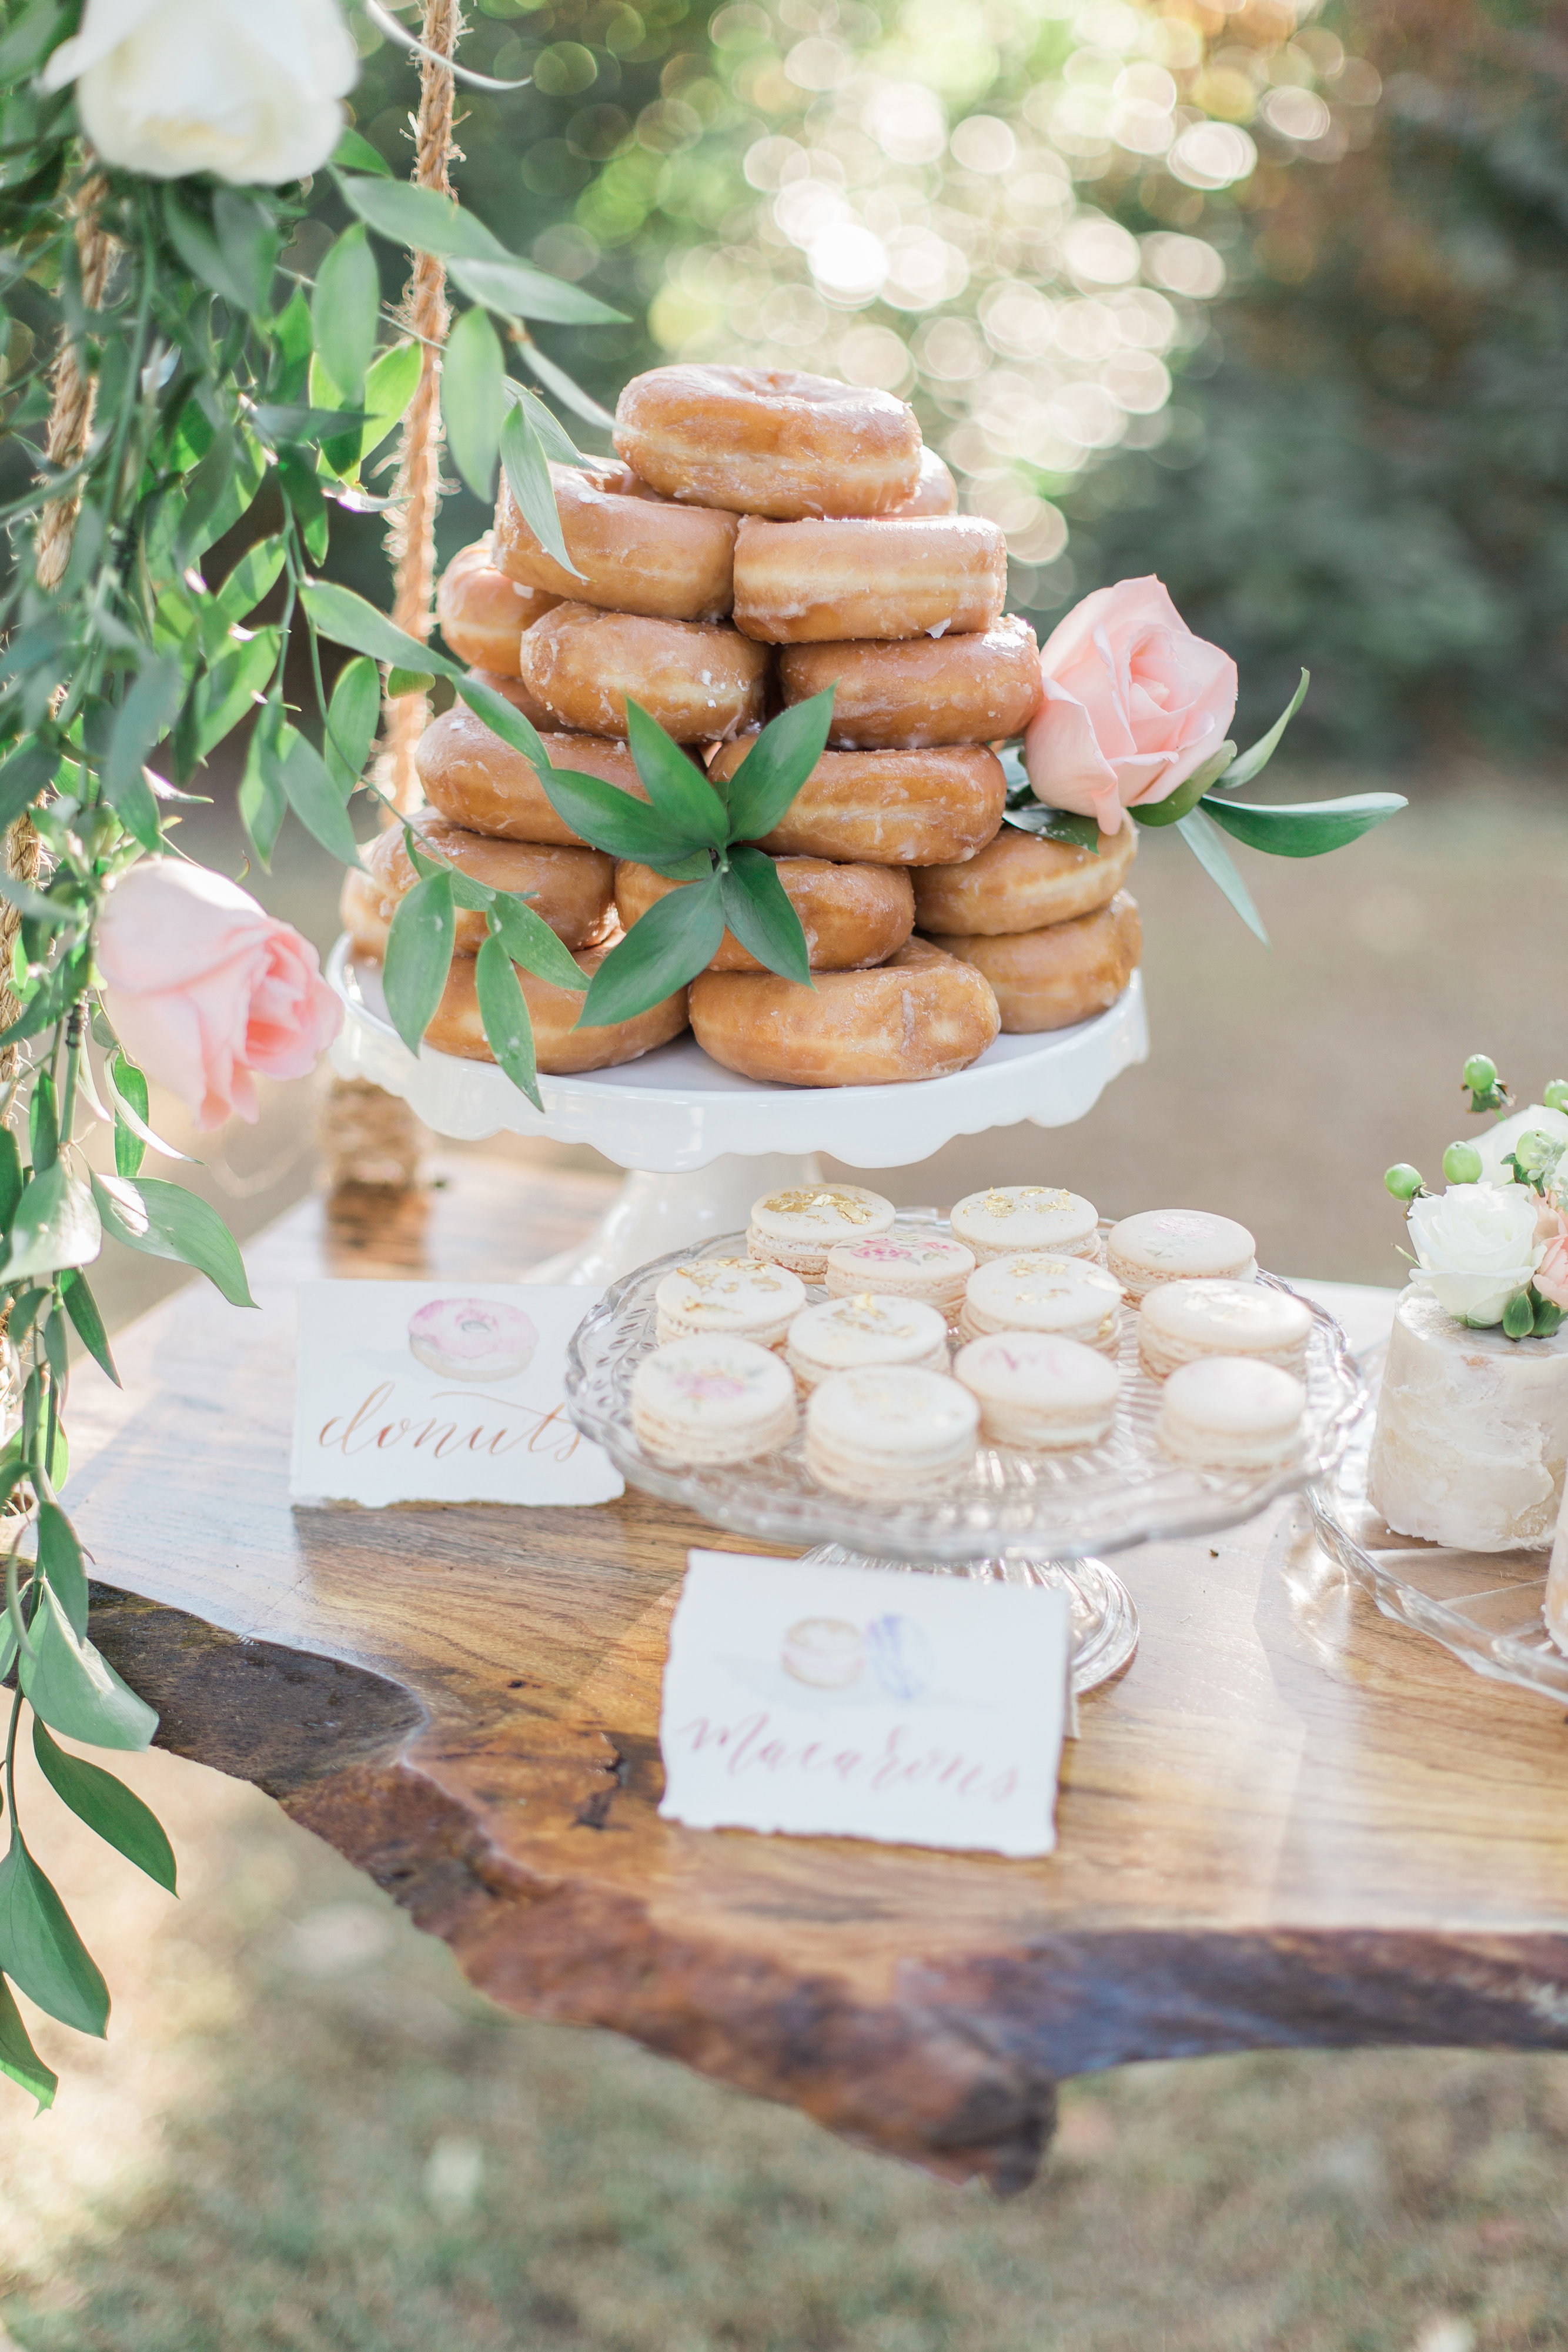 Southern Garden Chic Wedding Inspiration, garden wedding, cake swing, rustic wedding dessert table, rustic wedding